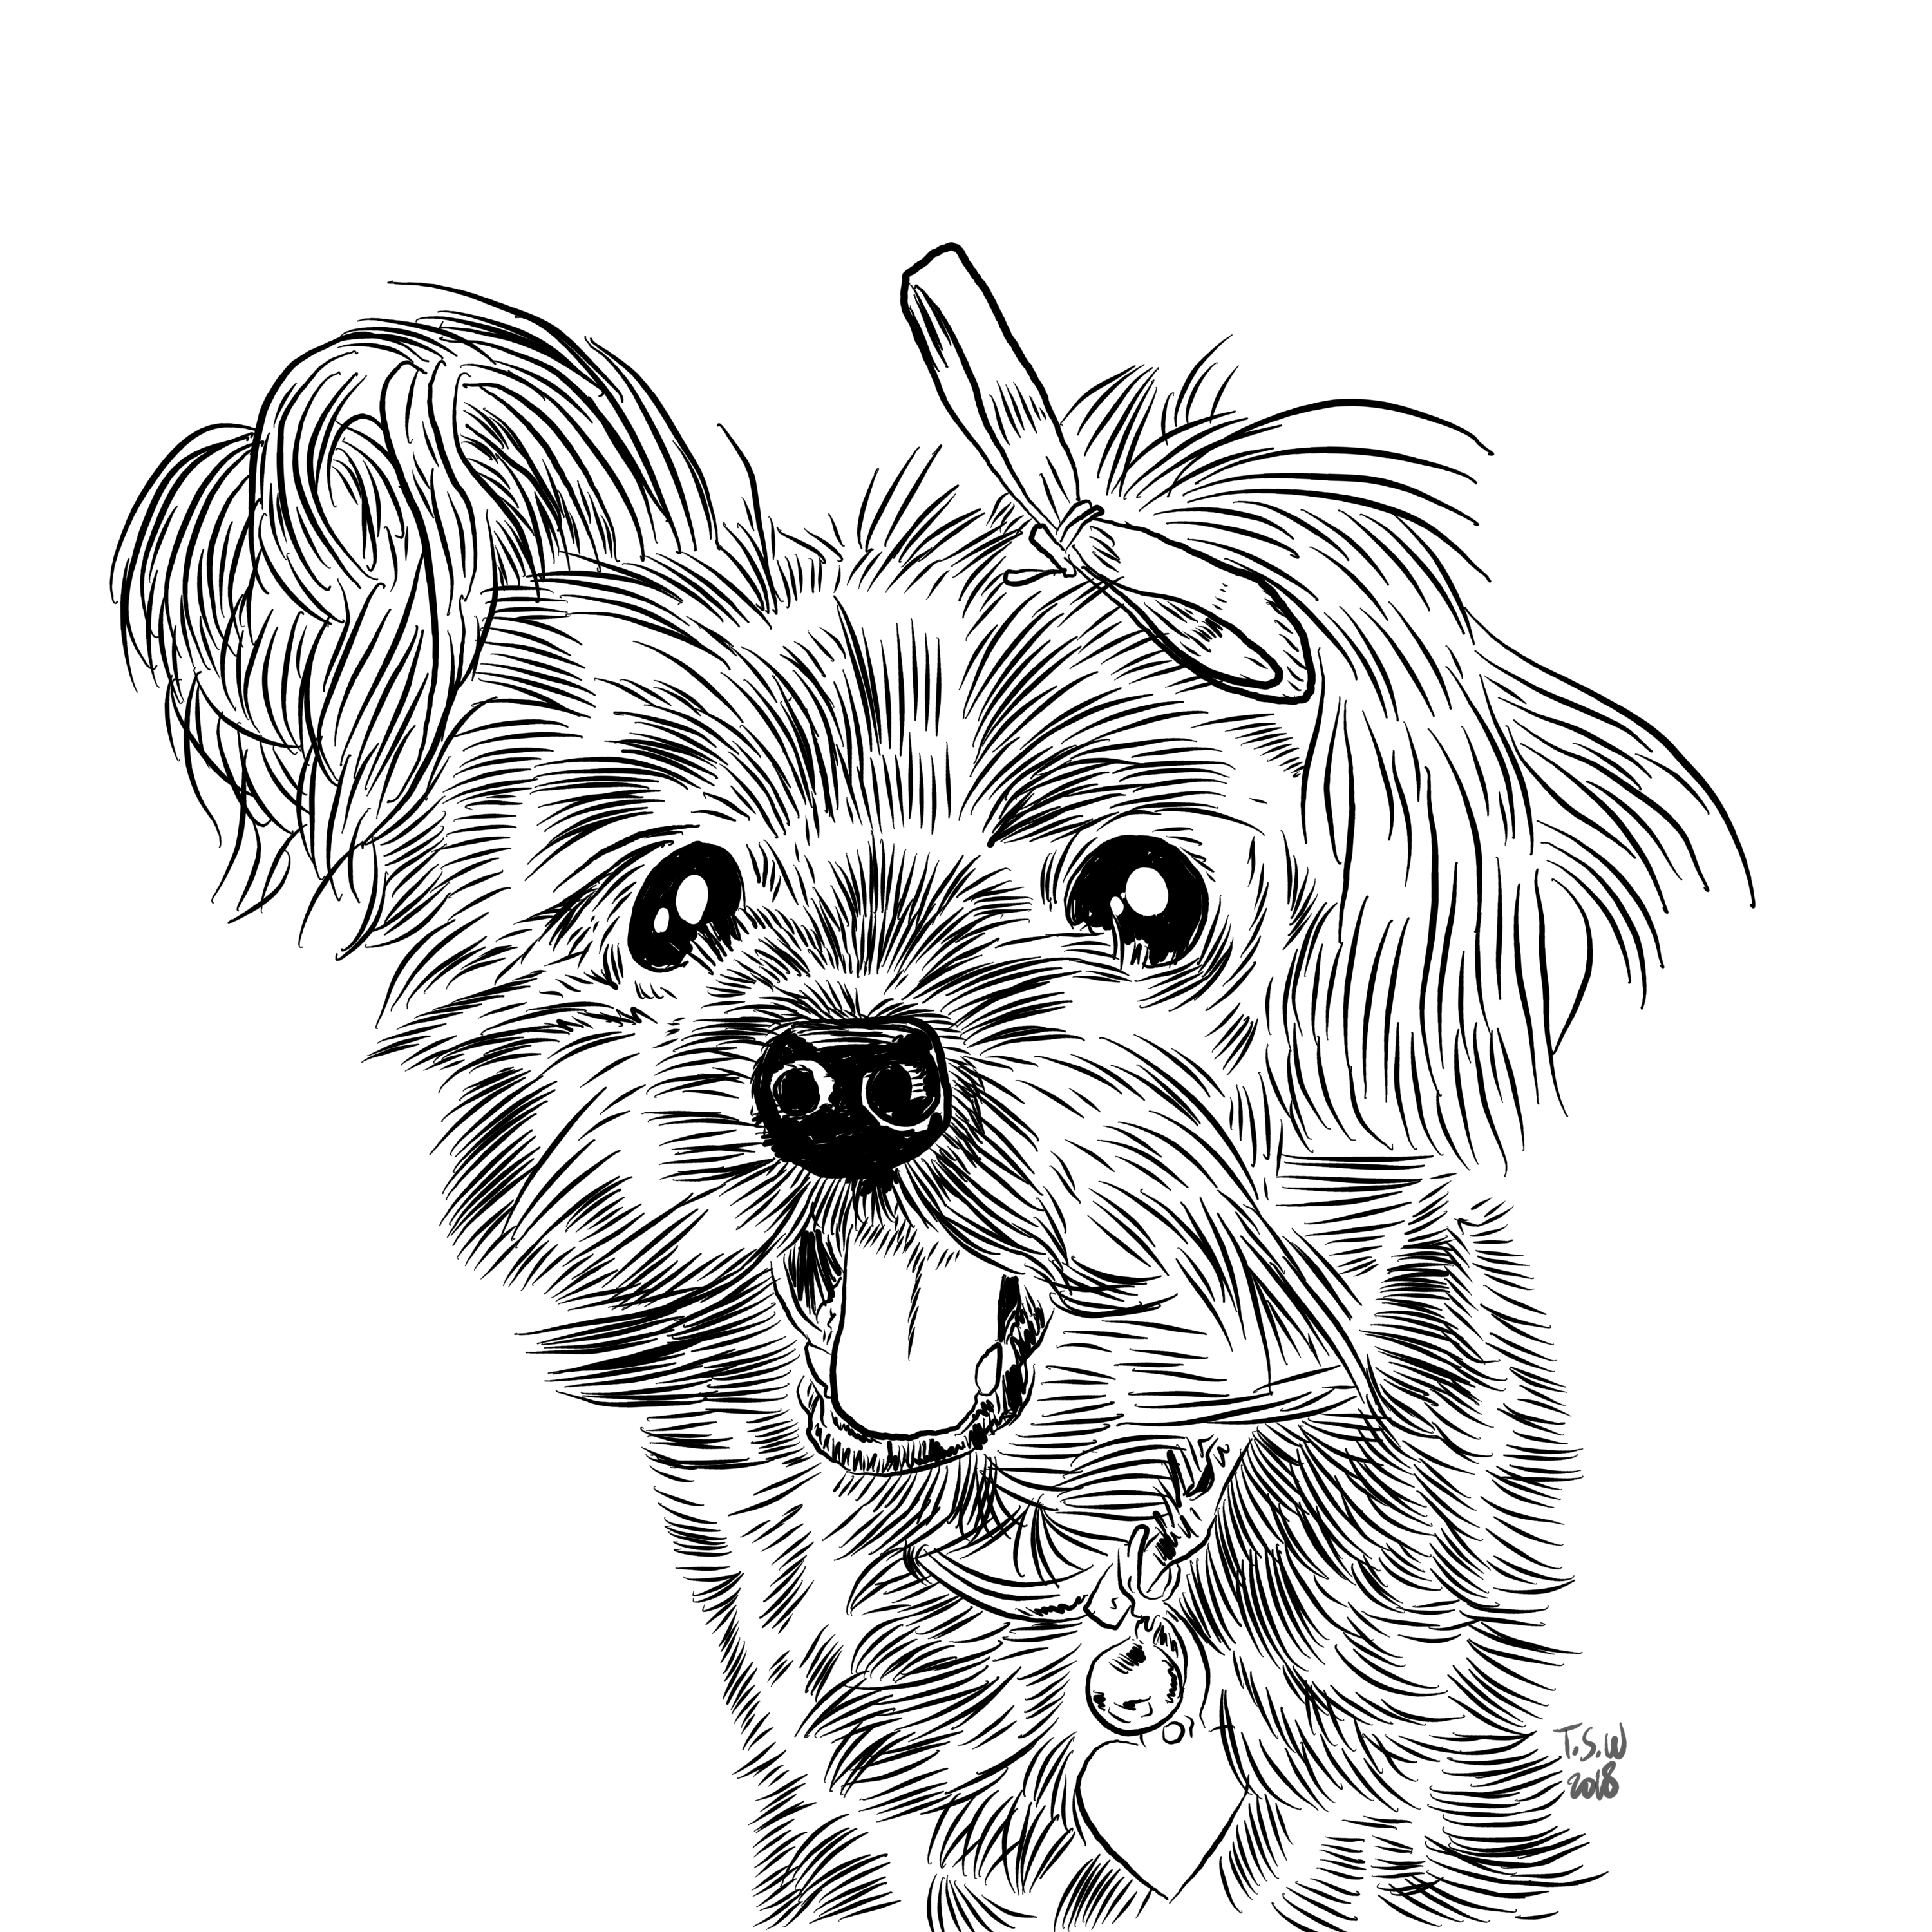 Custom dog illustration